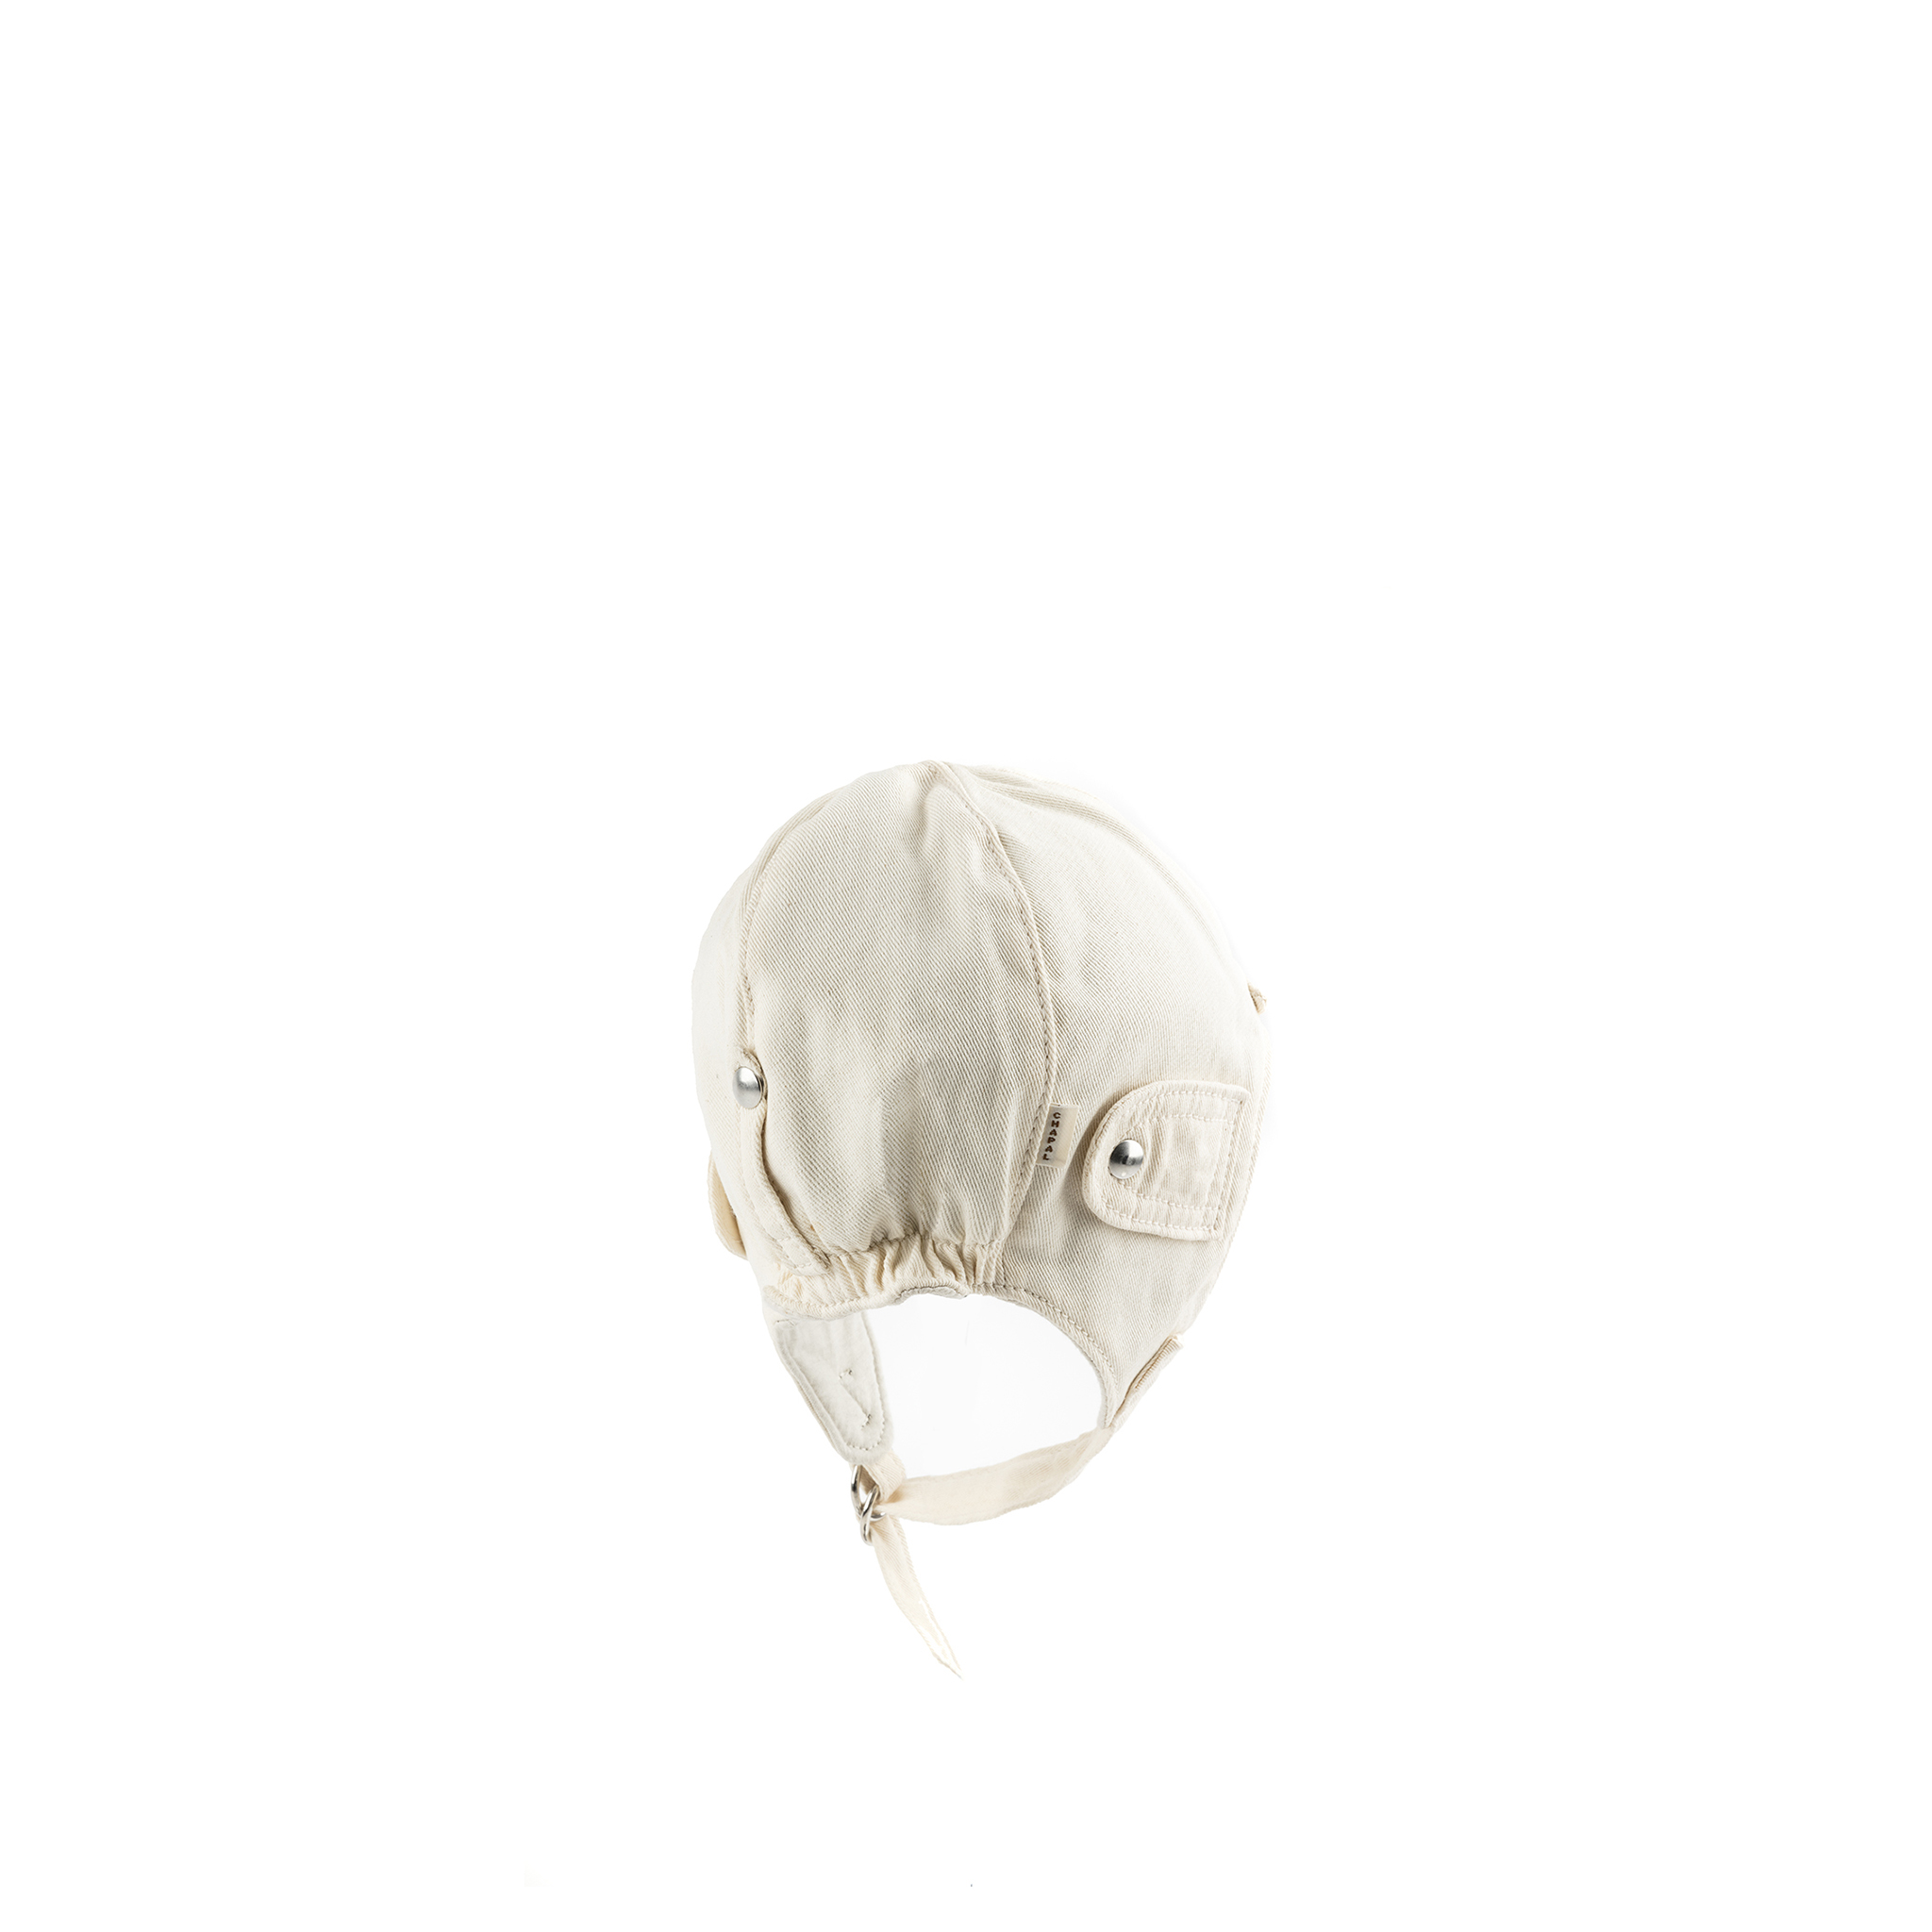 Driver Helmet - Cotton gabardine - Ecru color